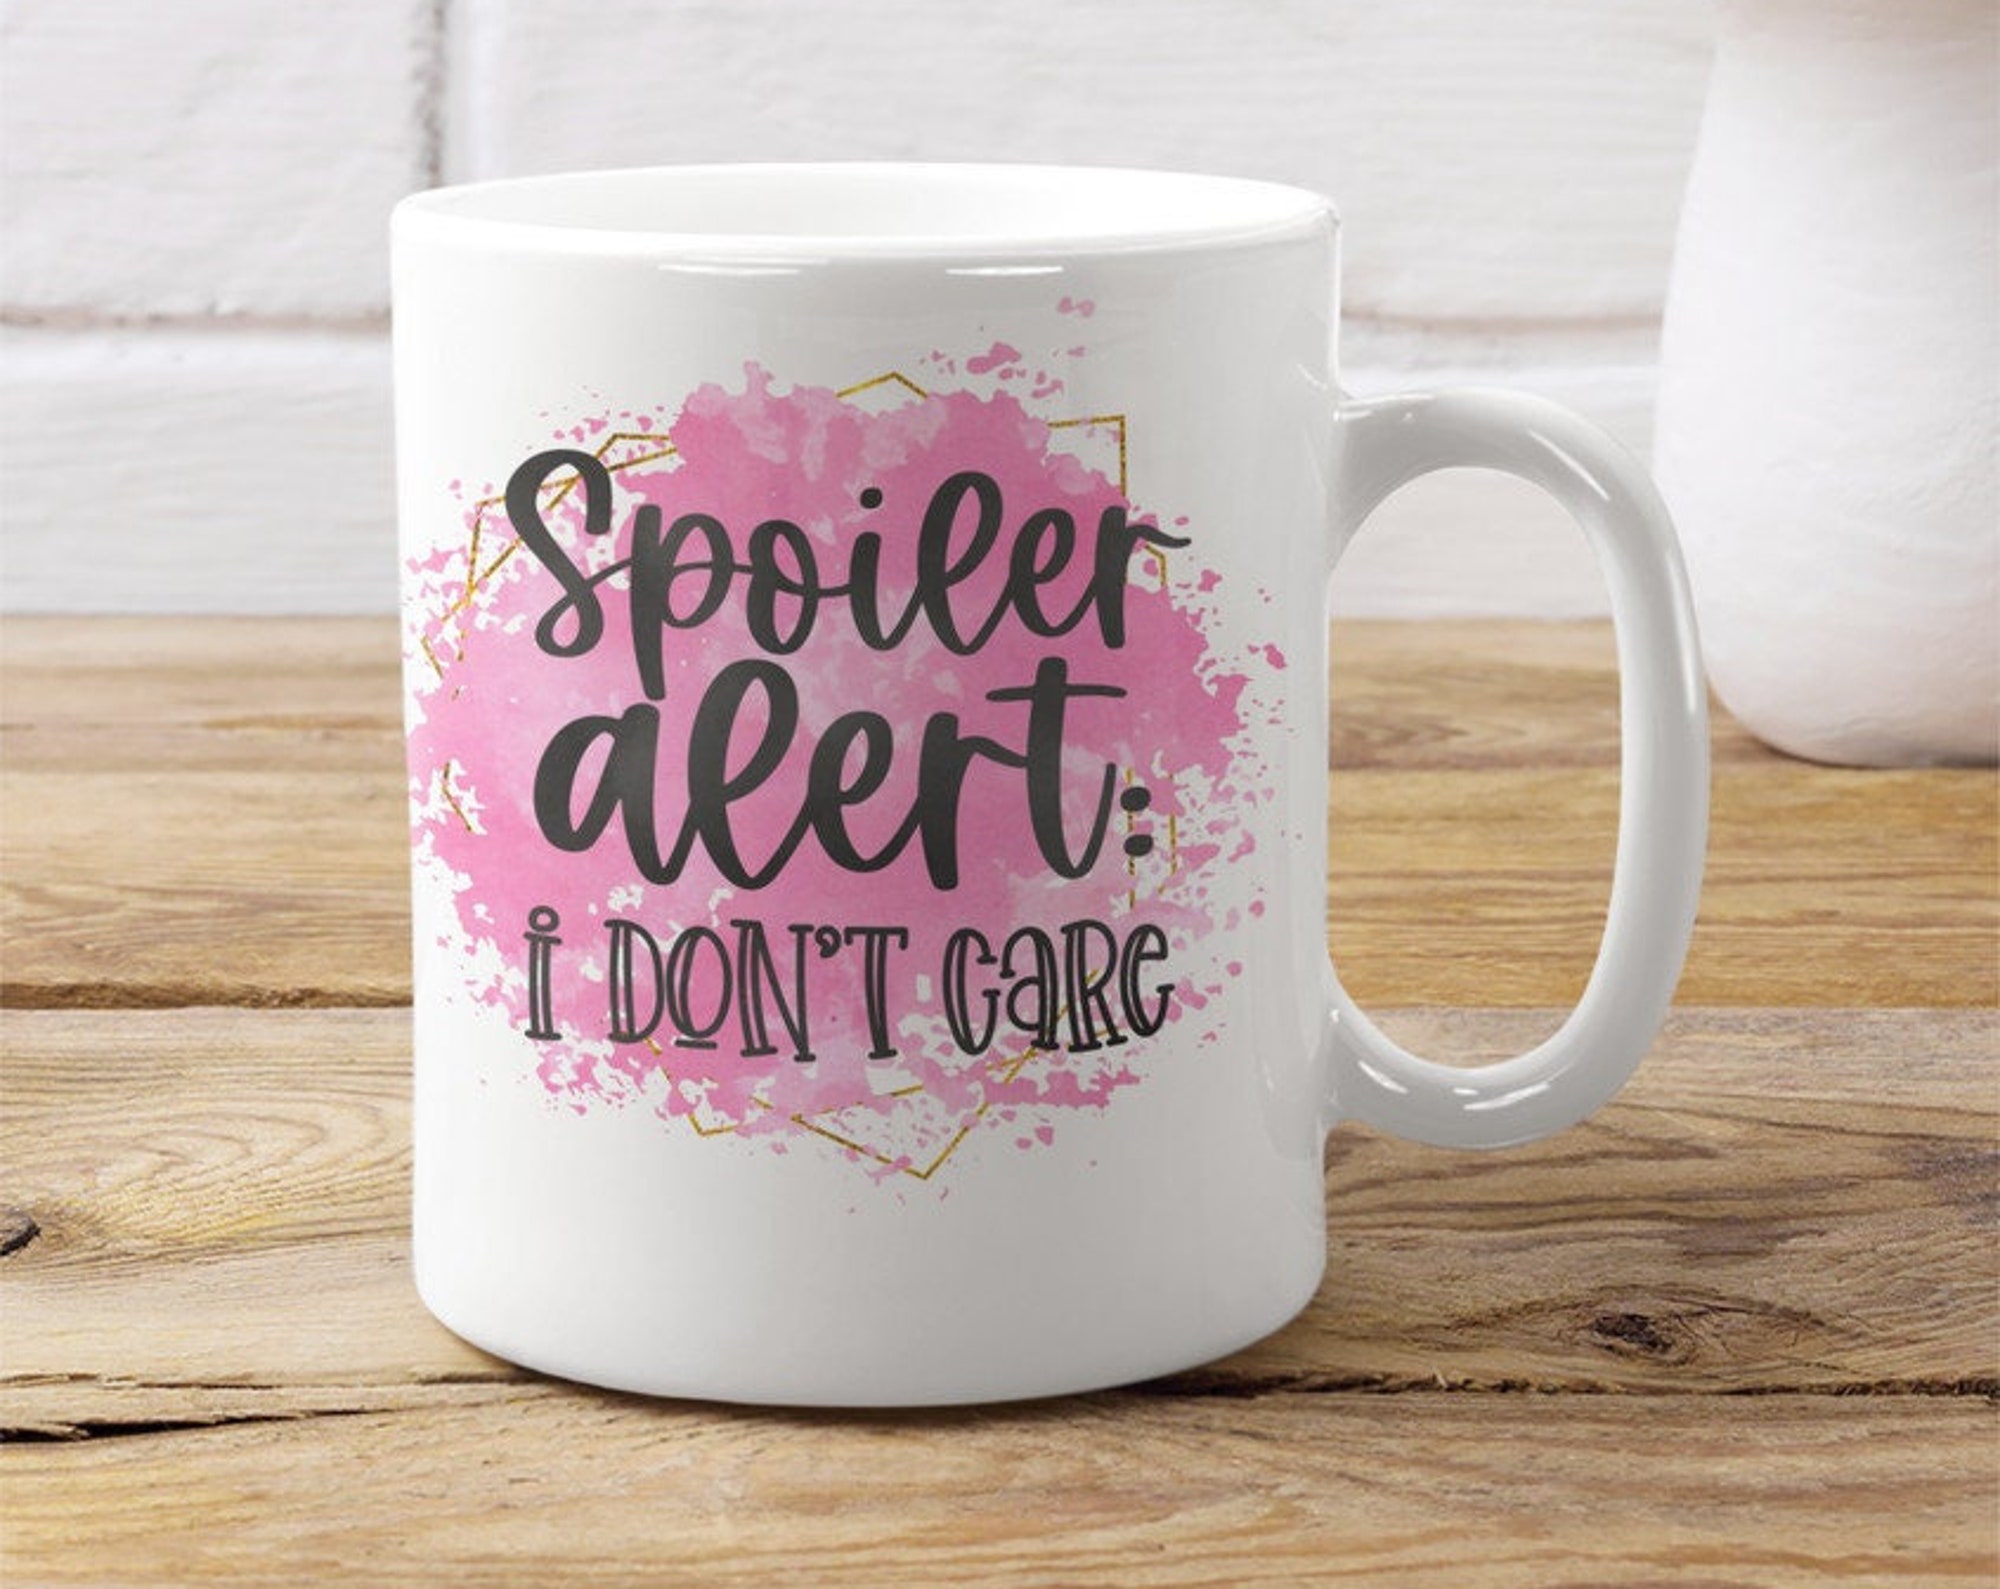 Discover I don't care Mug